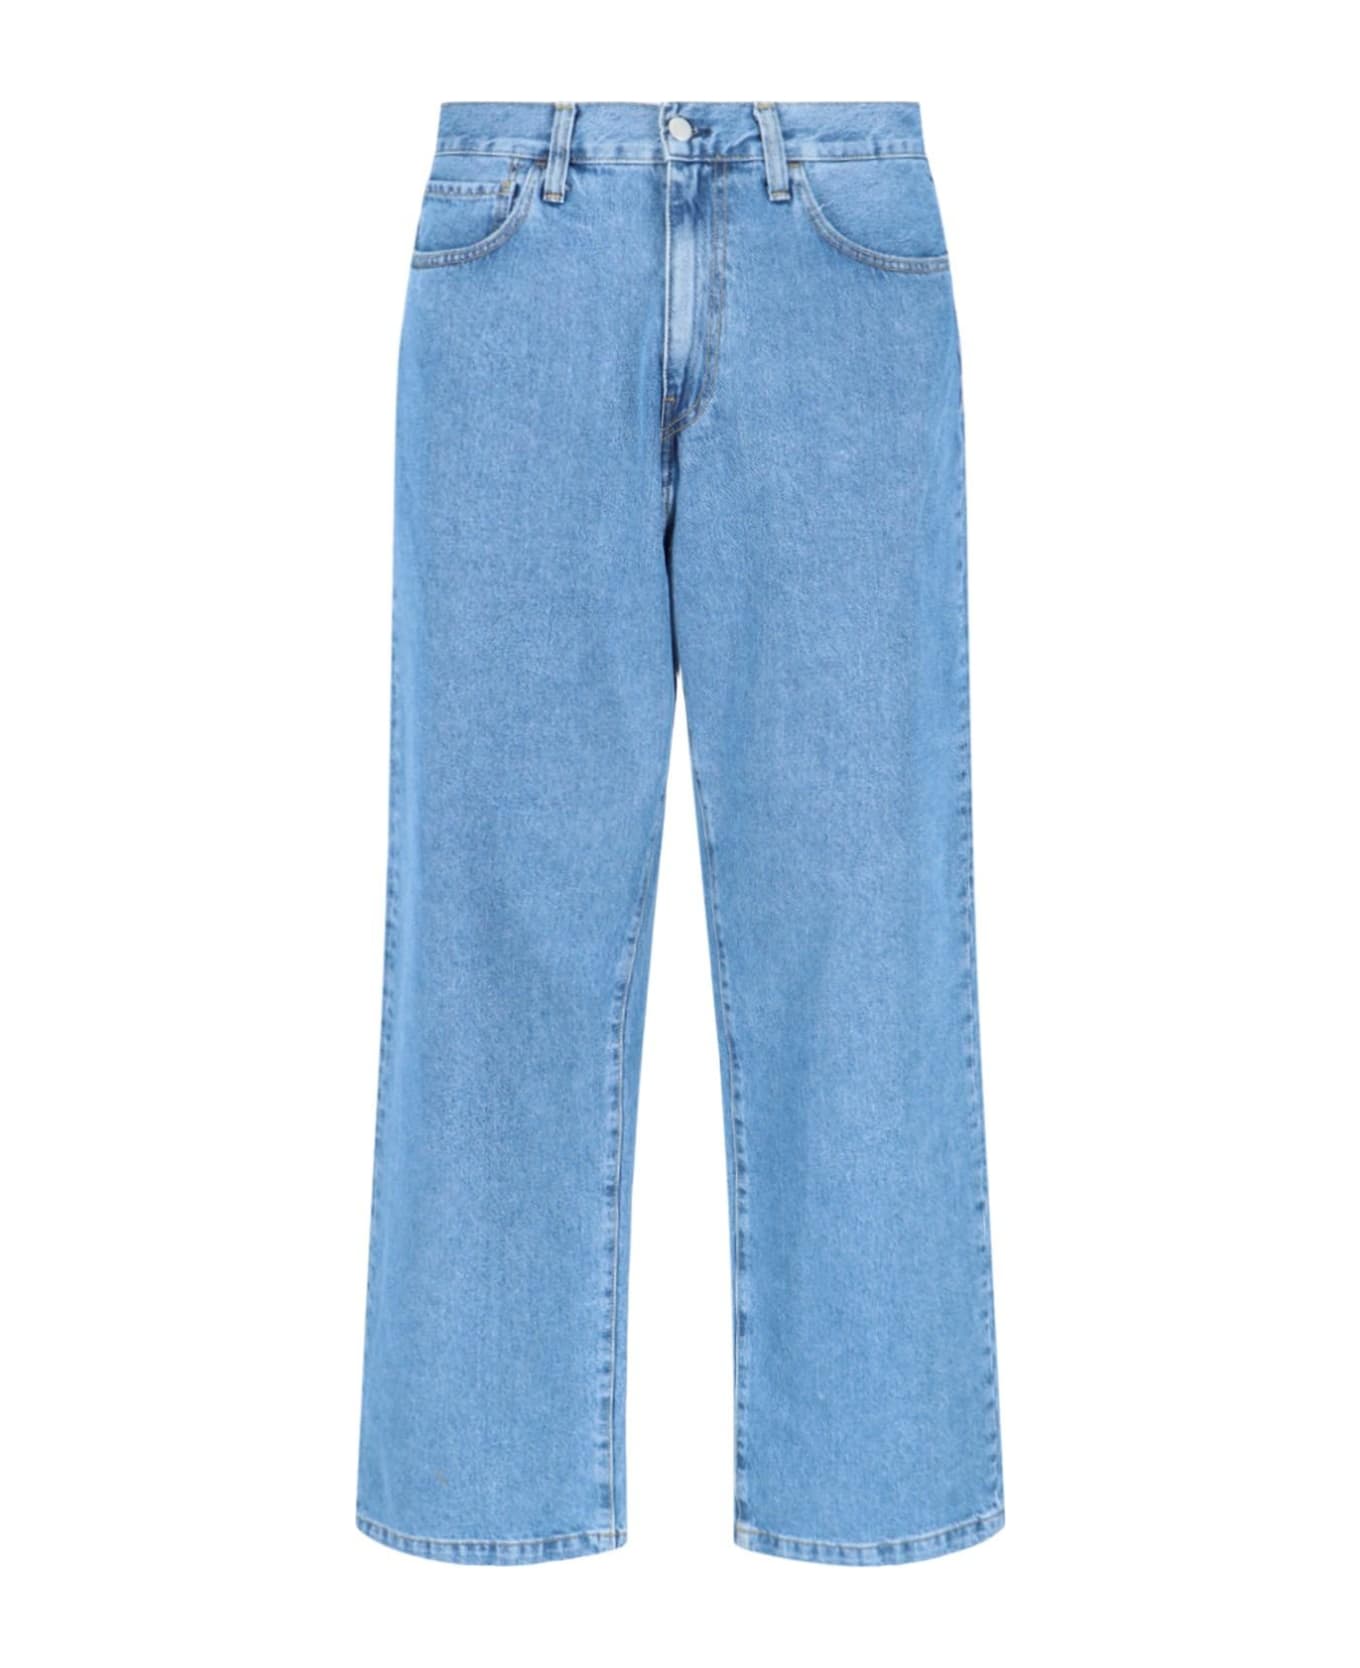 Carhartt Landon Jeans - Blue Heavy Stone Wash